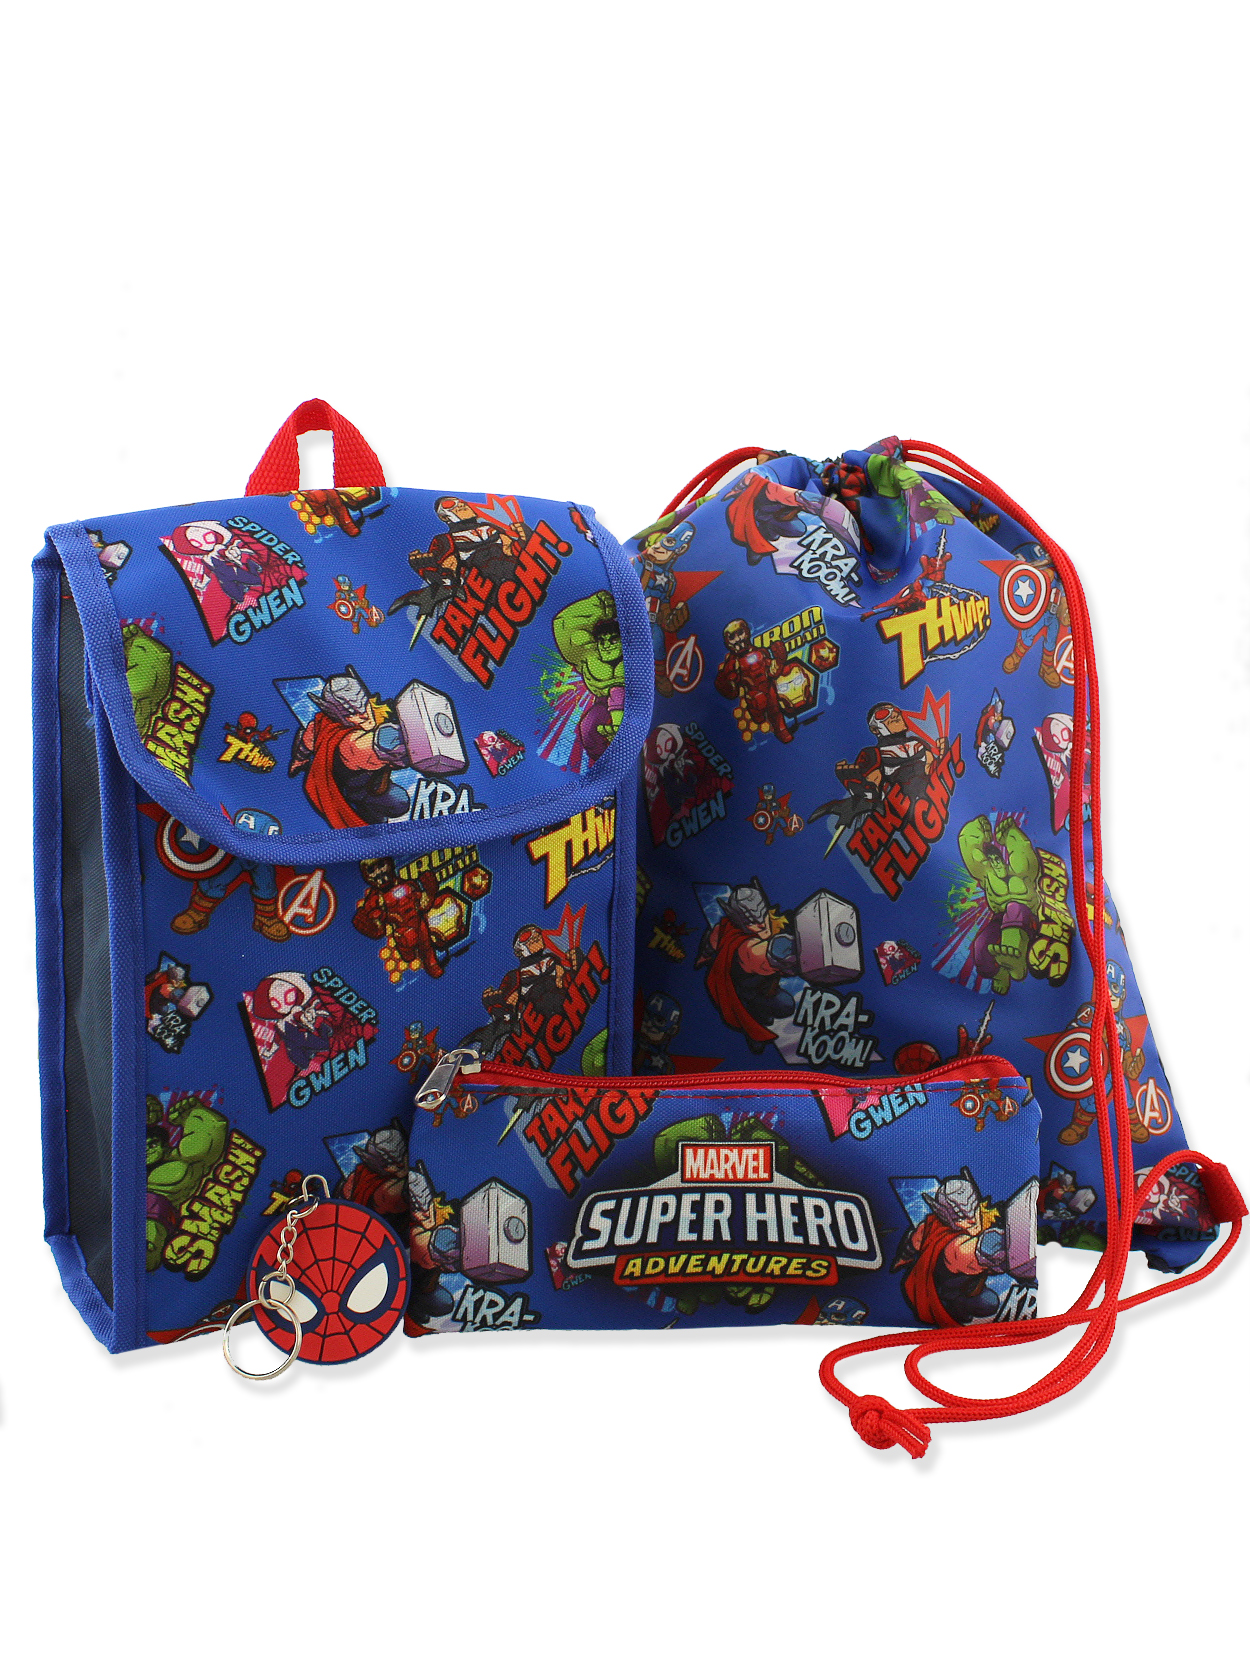 Super Hero Adventures Boys 5 piece Backpack and Snack Bag School Set MUCF5K3YT - image 3 of 7